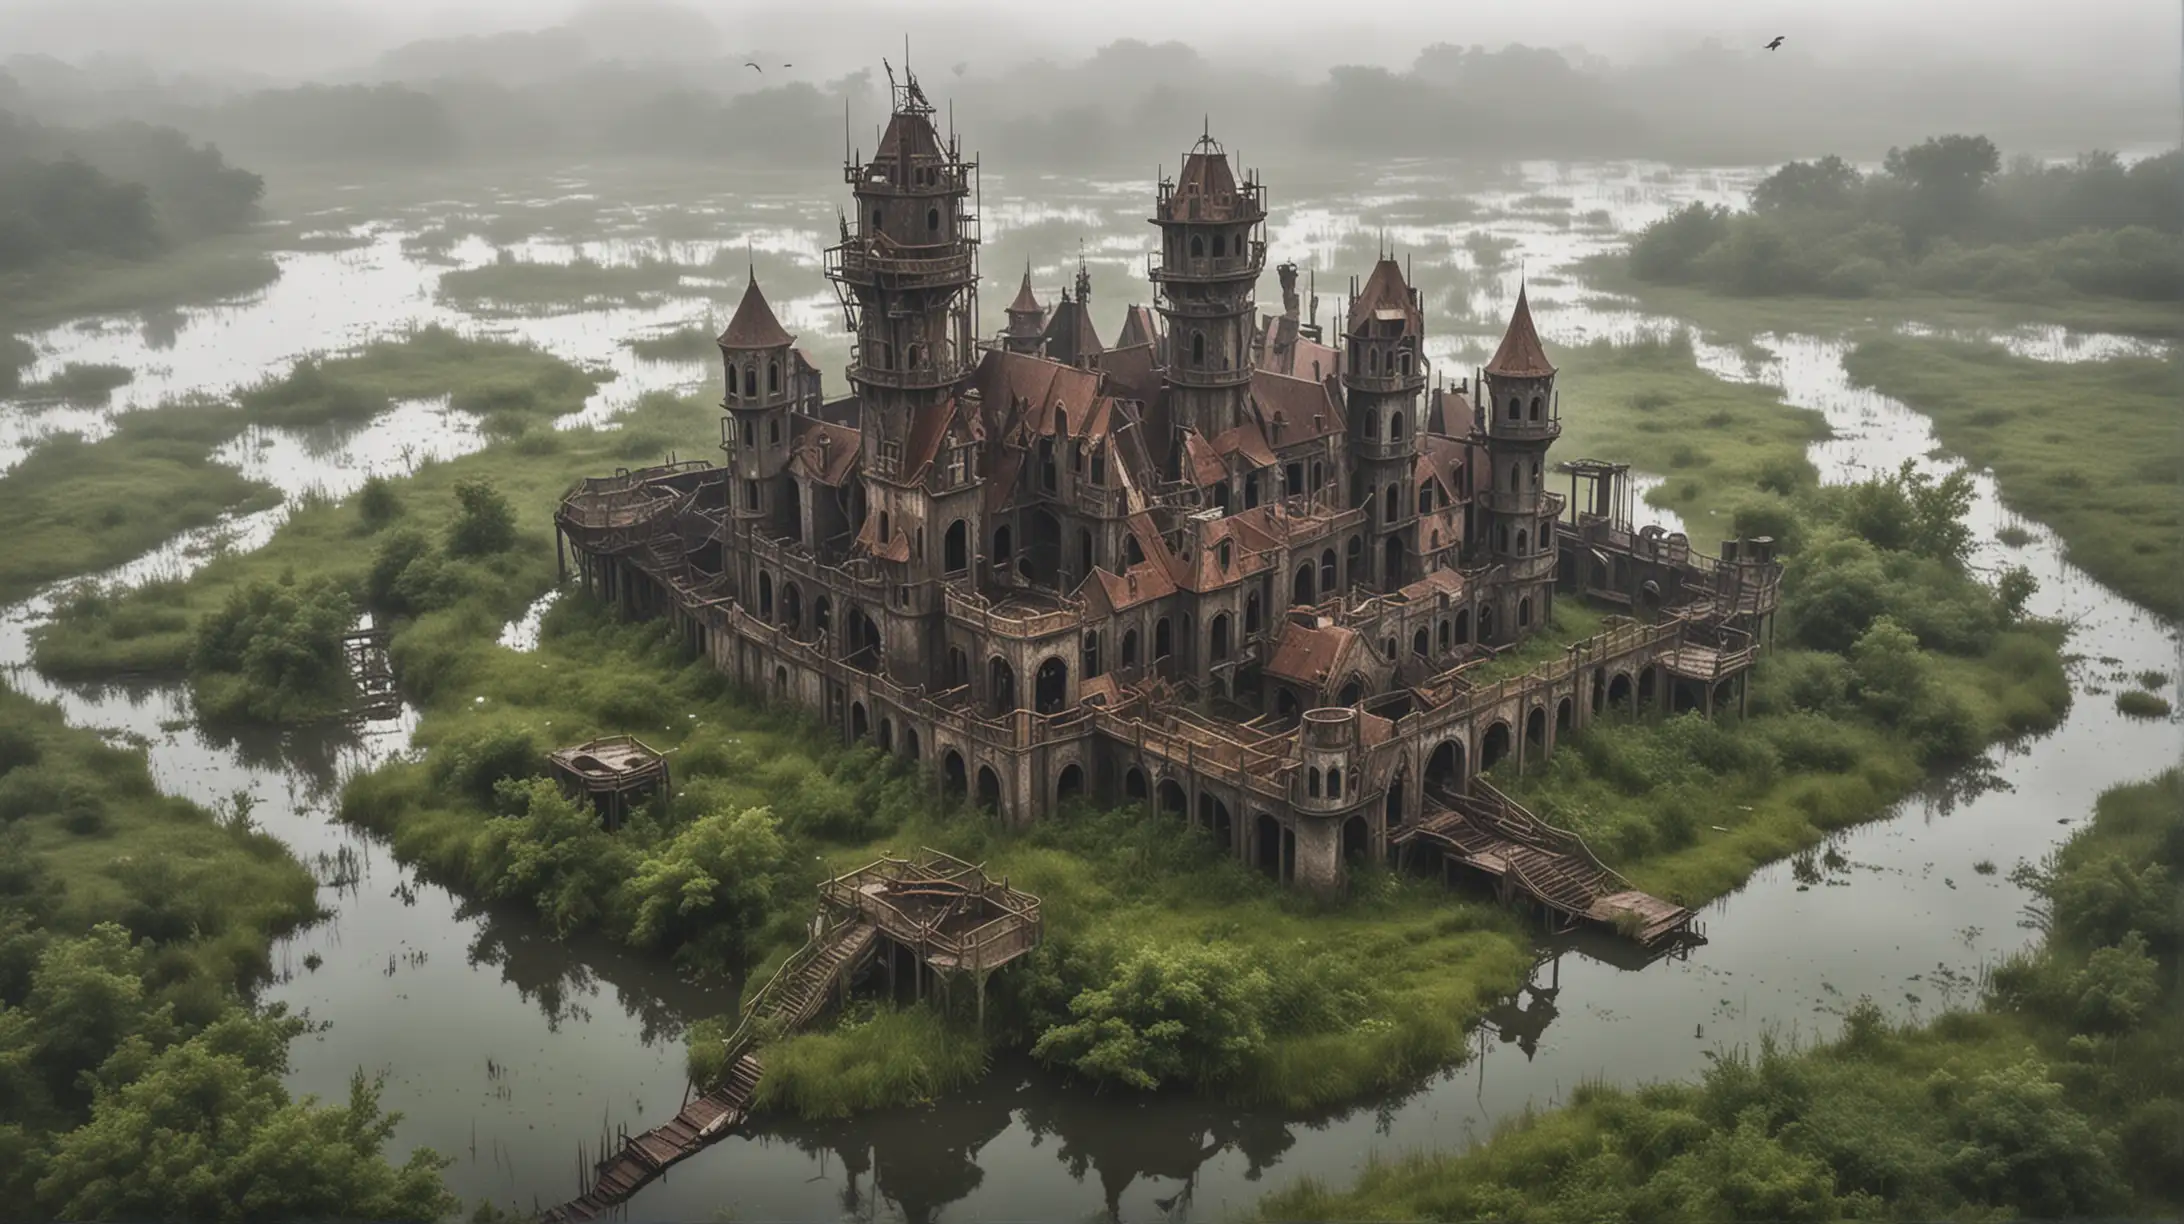 ruins of a steampunk castle on the verge of wetlands, cloudy, fog, rain, bird's eye view